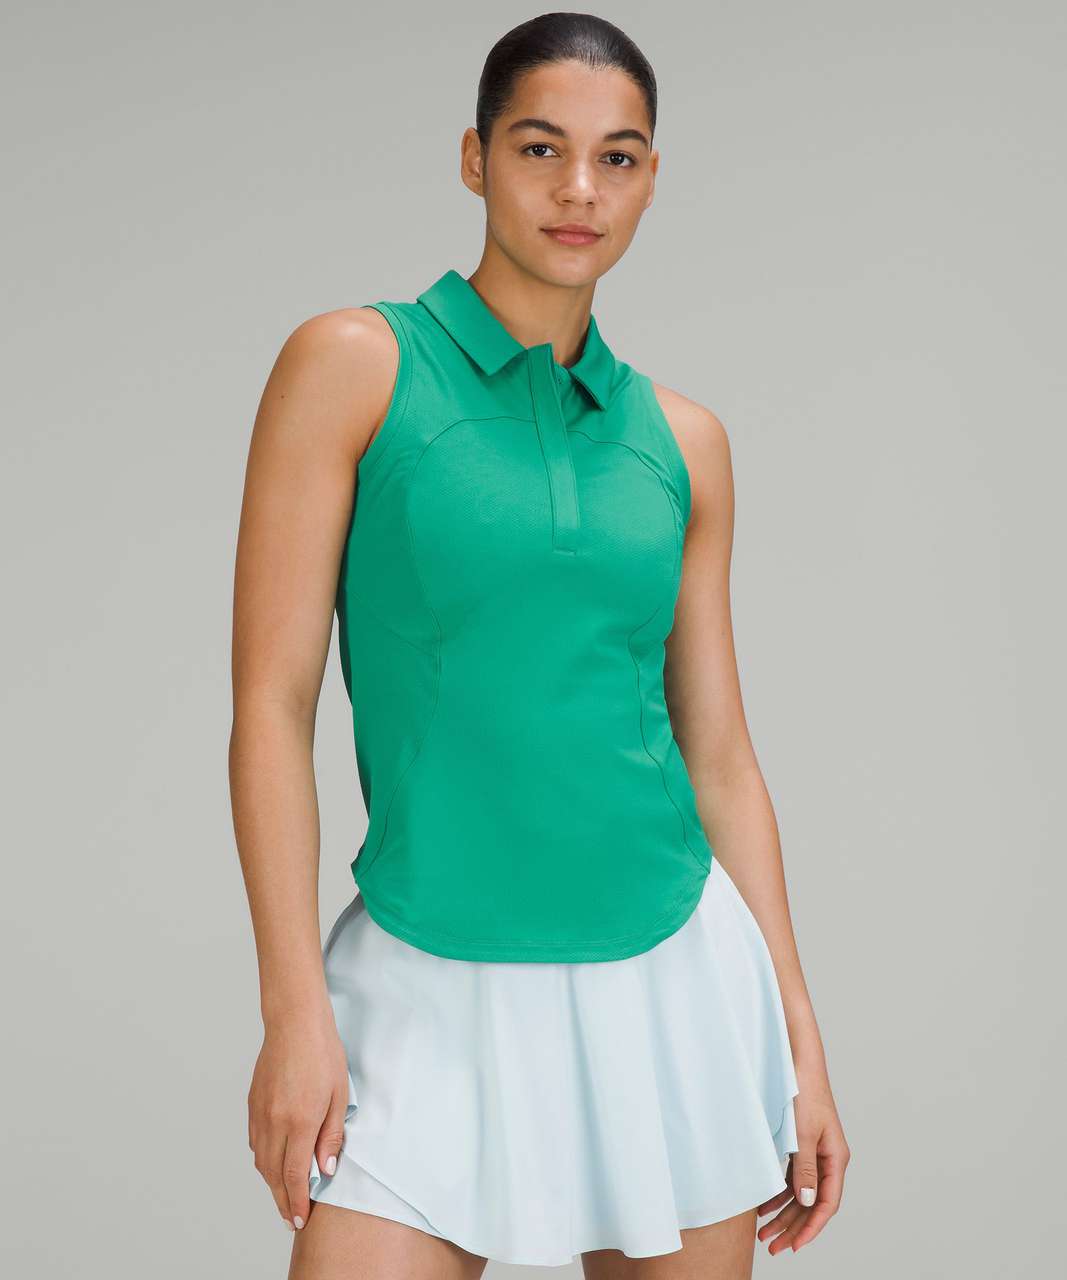 Lululemon Quick-Dry Sleeveless Polo Shirt - Maldives Green